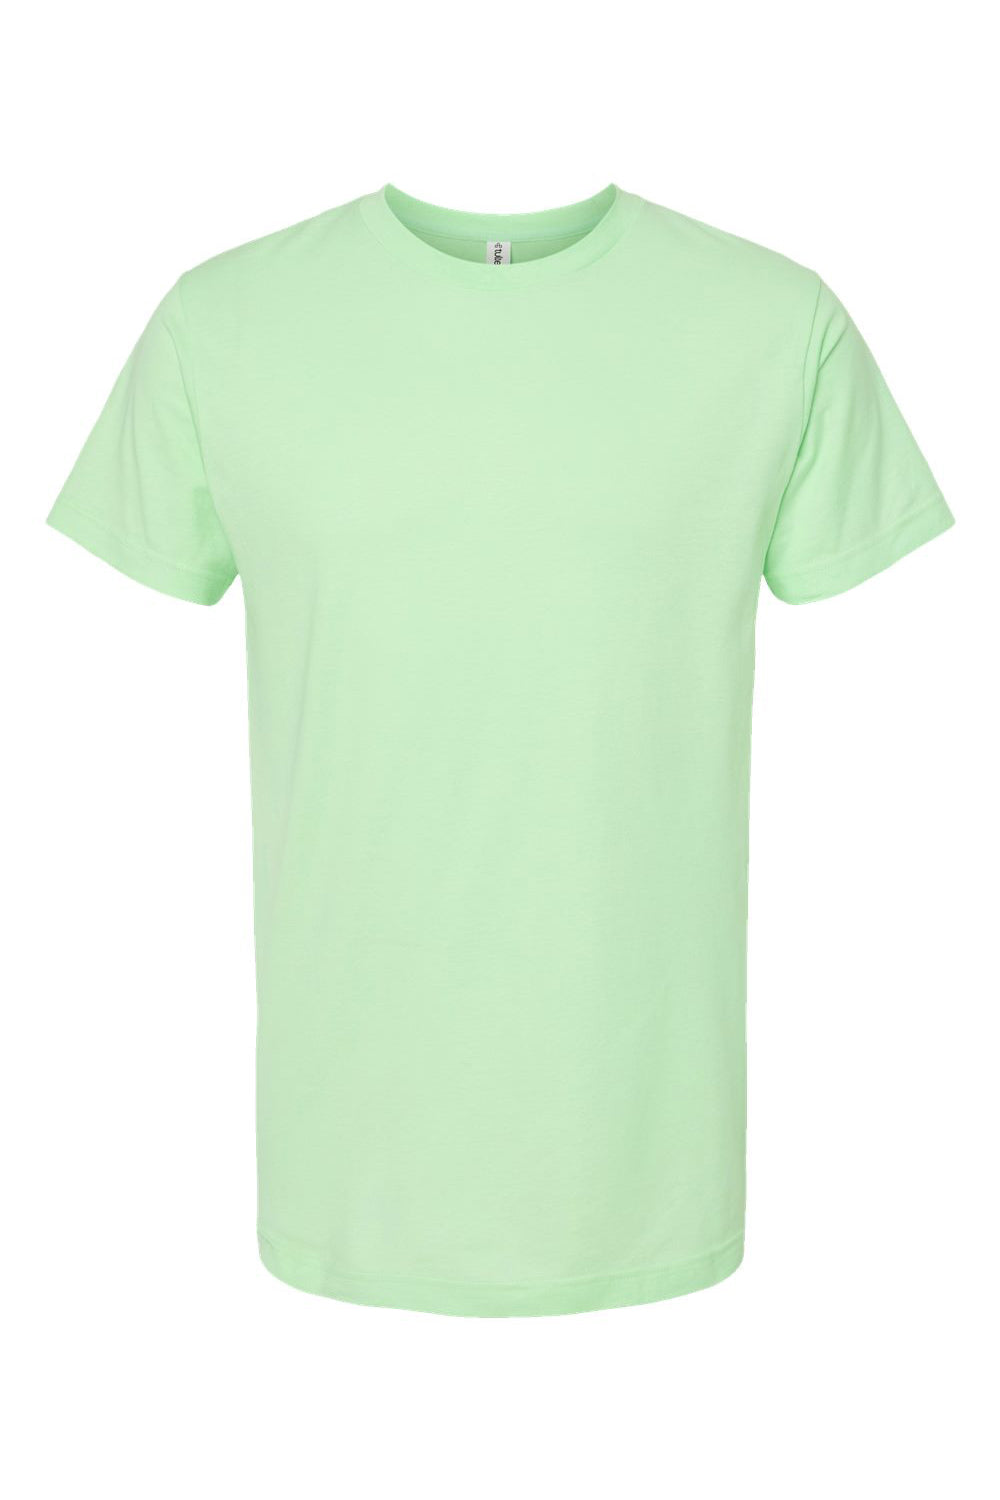 Tultex 202 Mens Fine Jersey Short Sleeve Crewneck T-Shirt Neo Mint Green Flat Front